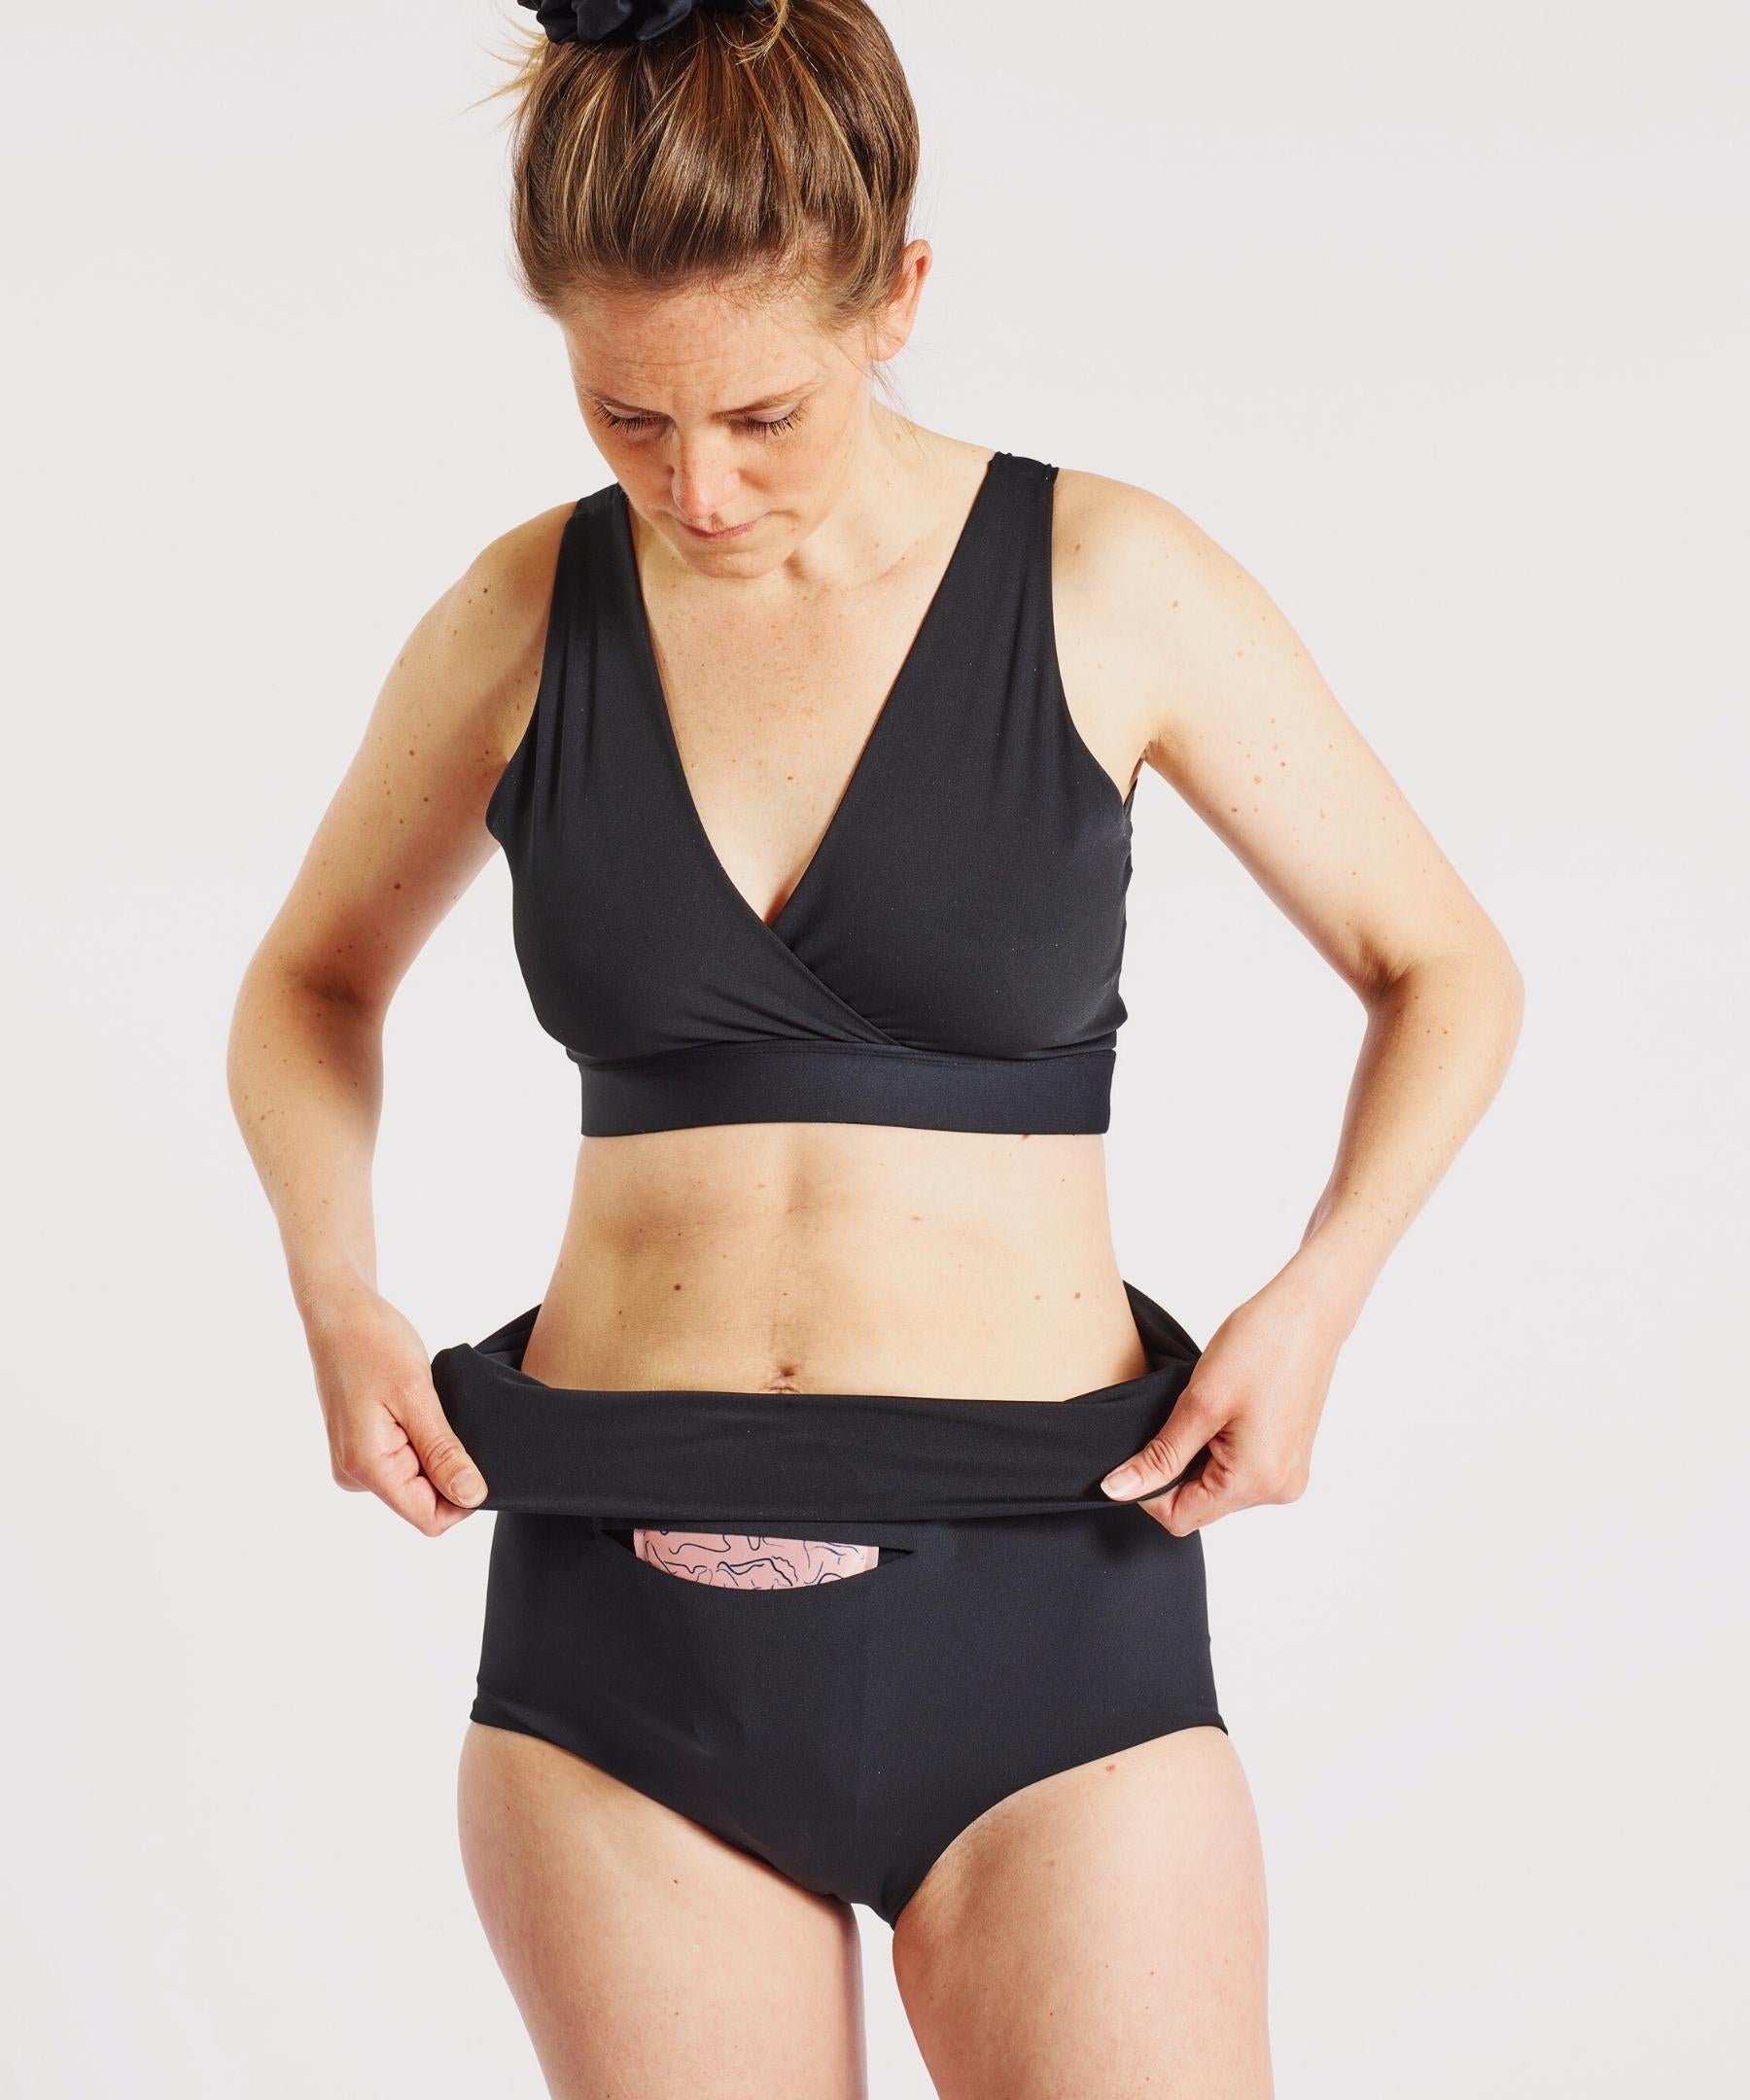 Model in Nyssa FourthWear Postpartum Recovery Underwear